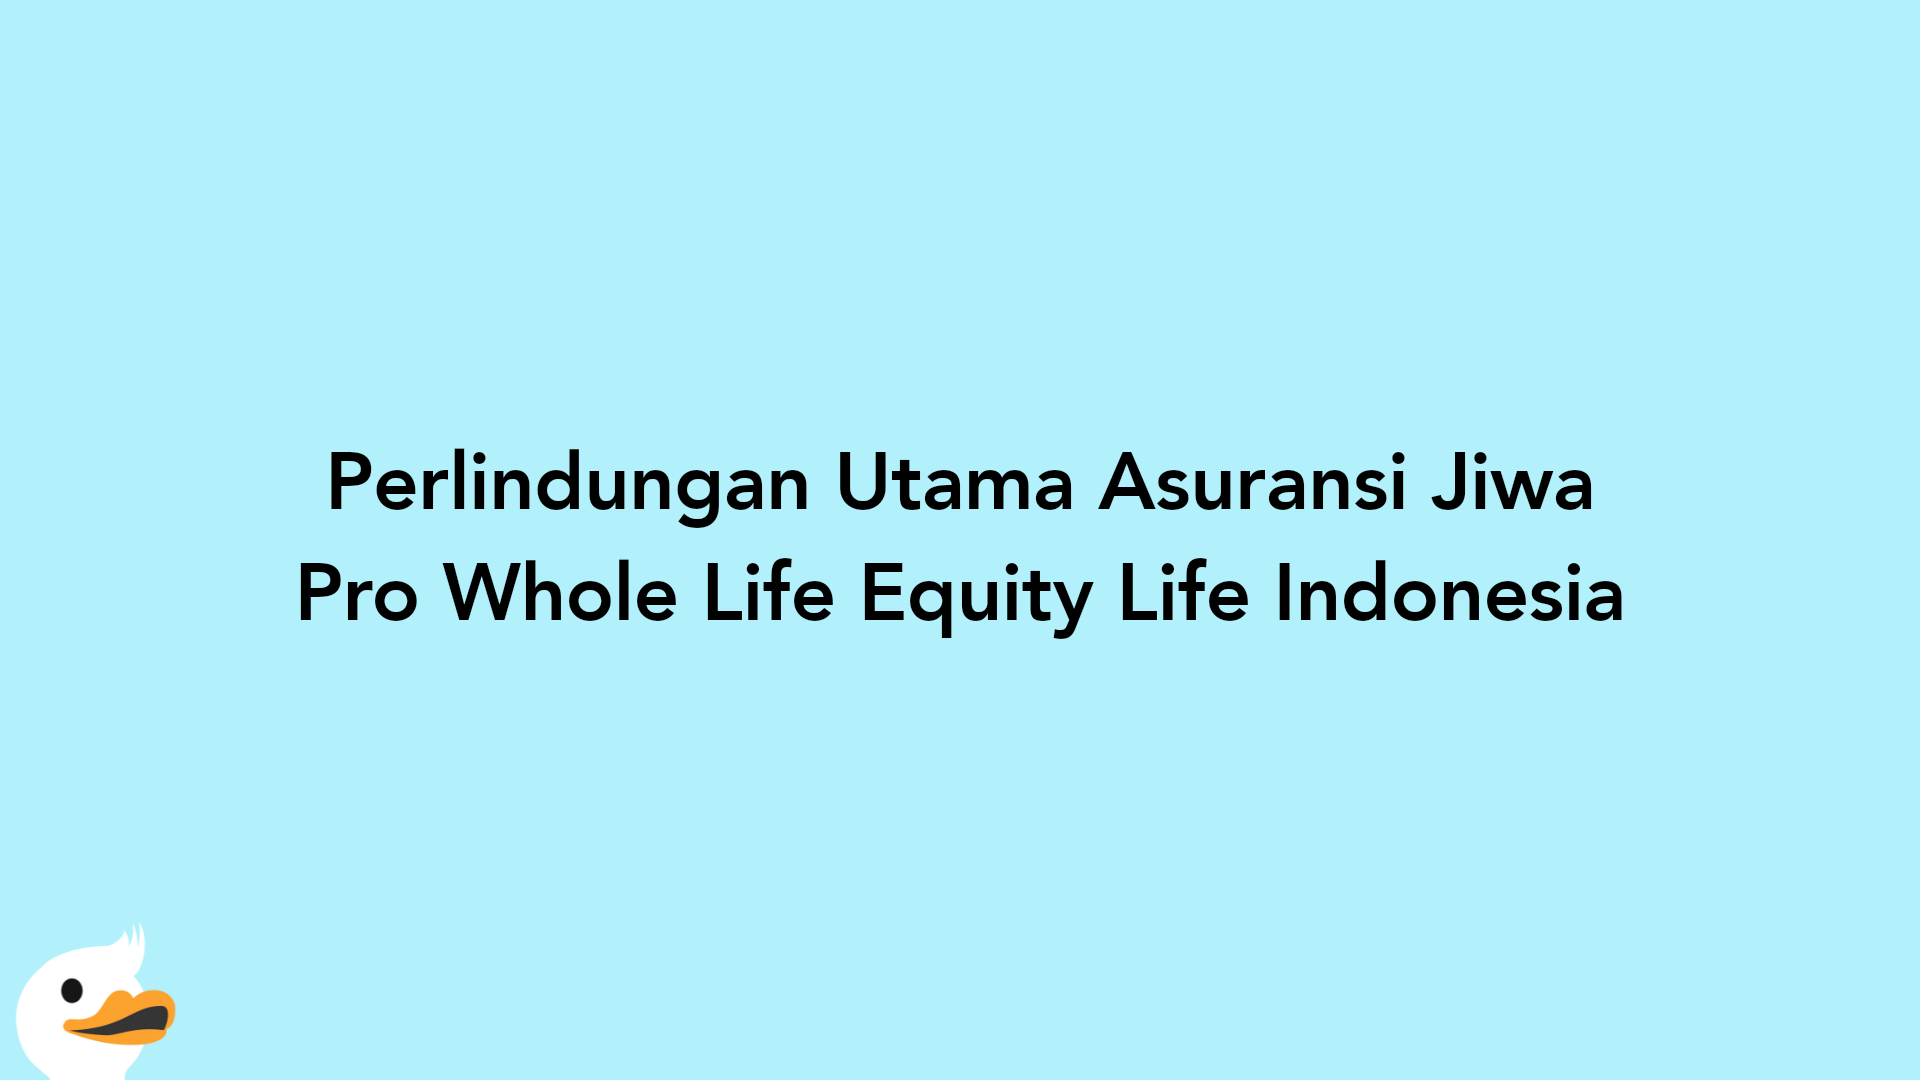 Perlindungan Utama Asuransi Jiwa Pro Whole Life Equity Life Indonesia